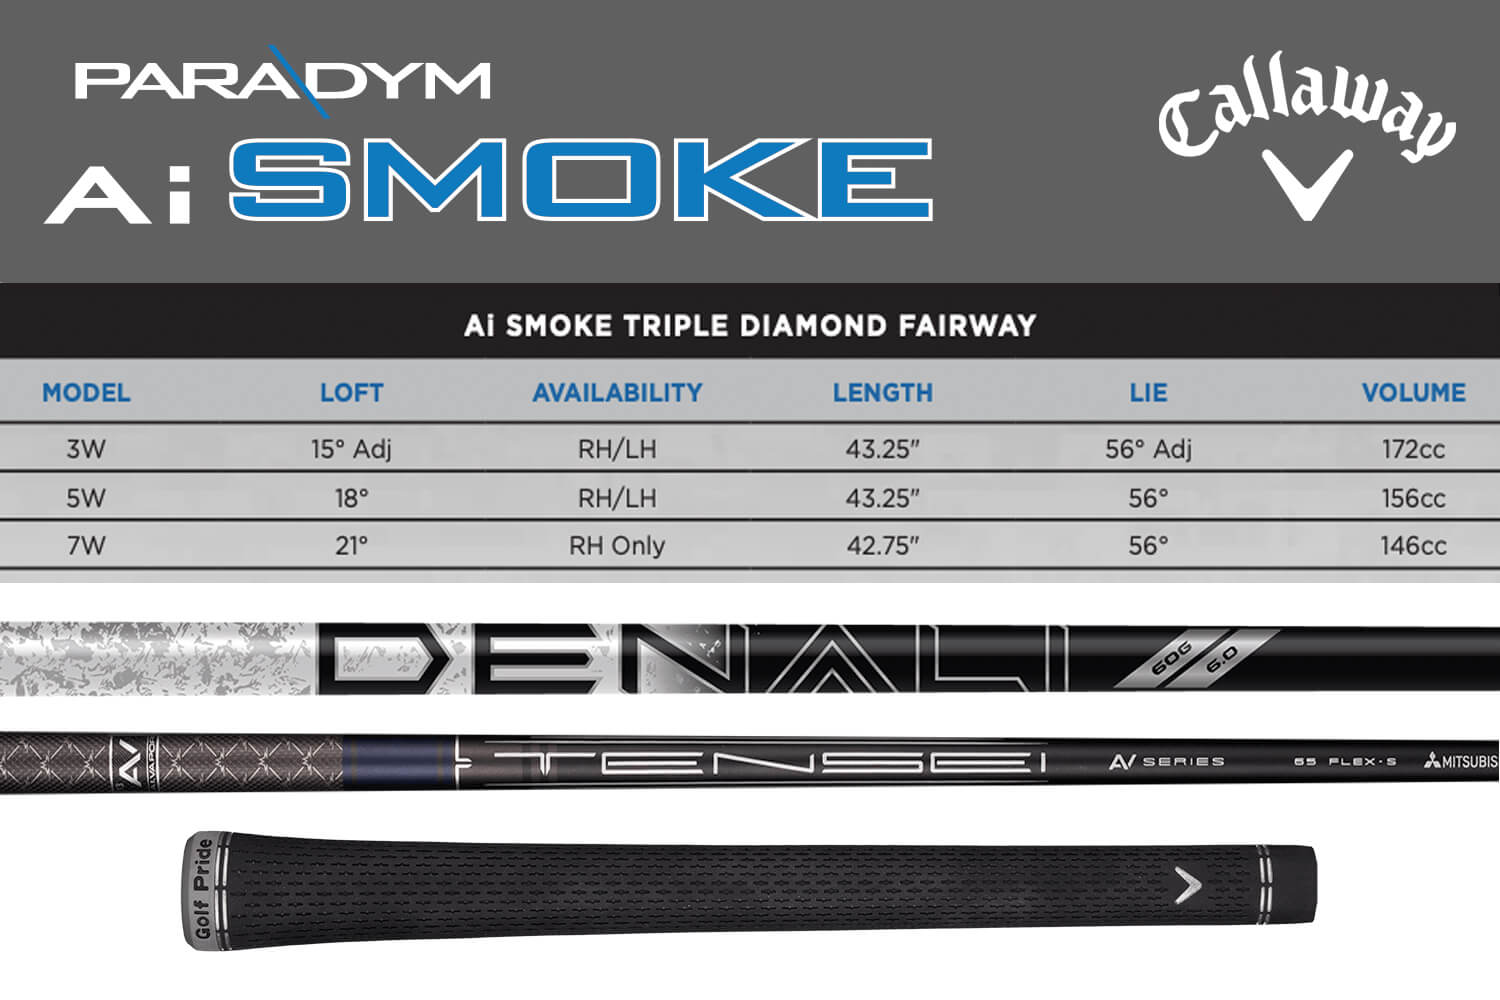 Specification for Callaway Paradym Ai Smoke Triple Diamond Fairway Wood